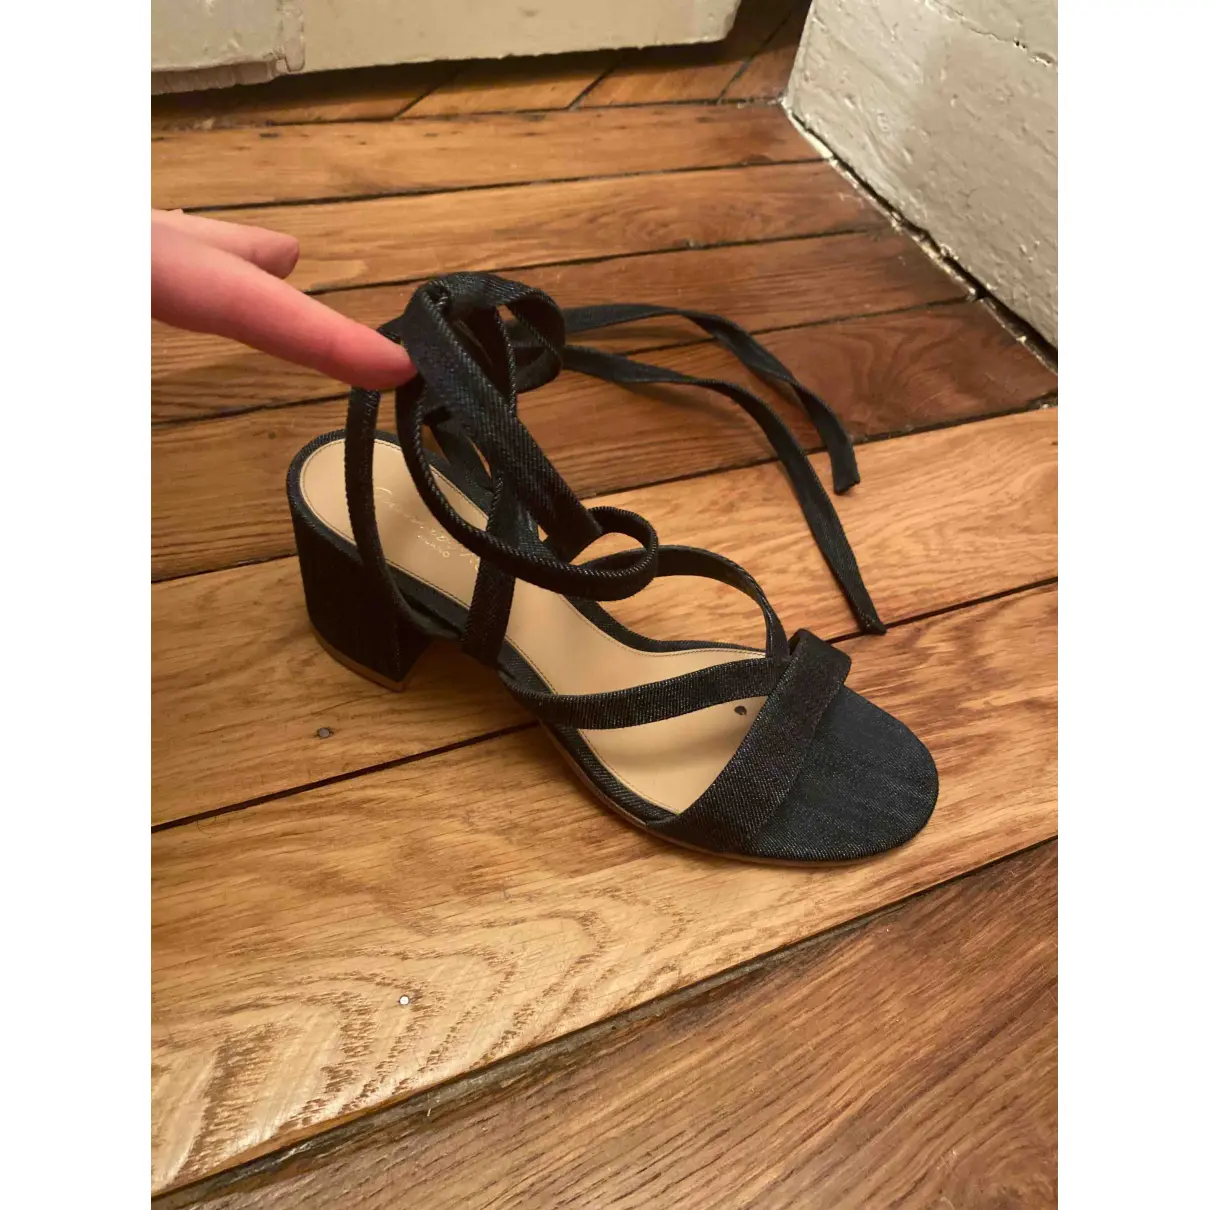 Buy Gianvito Rossi Cloth sandal online